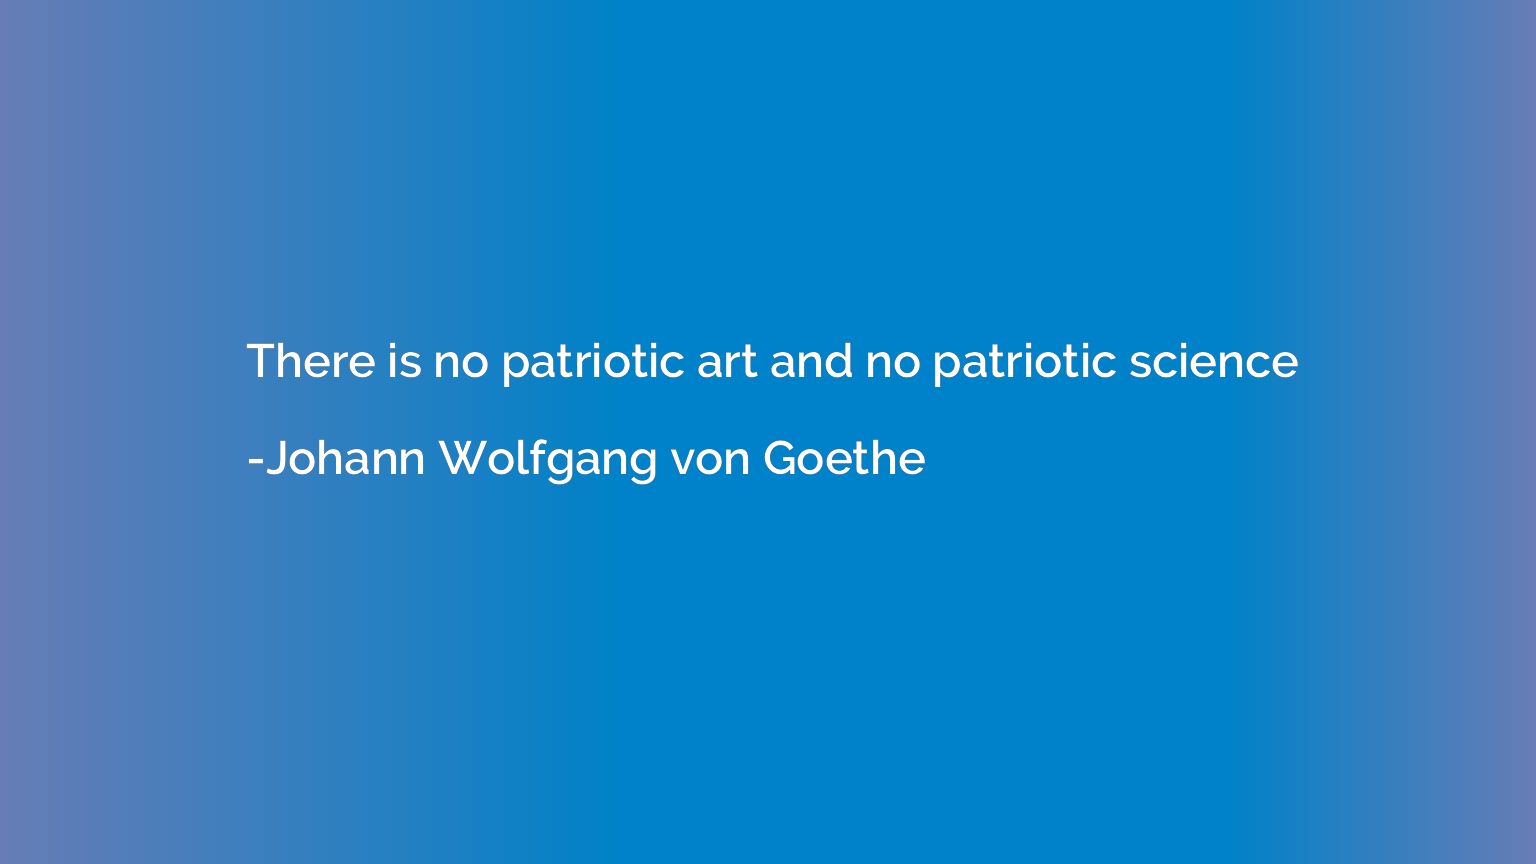 There is no patriotic art and no patriotic science